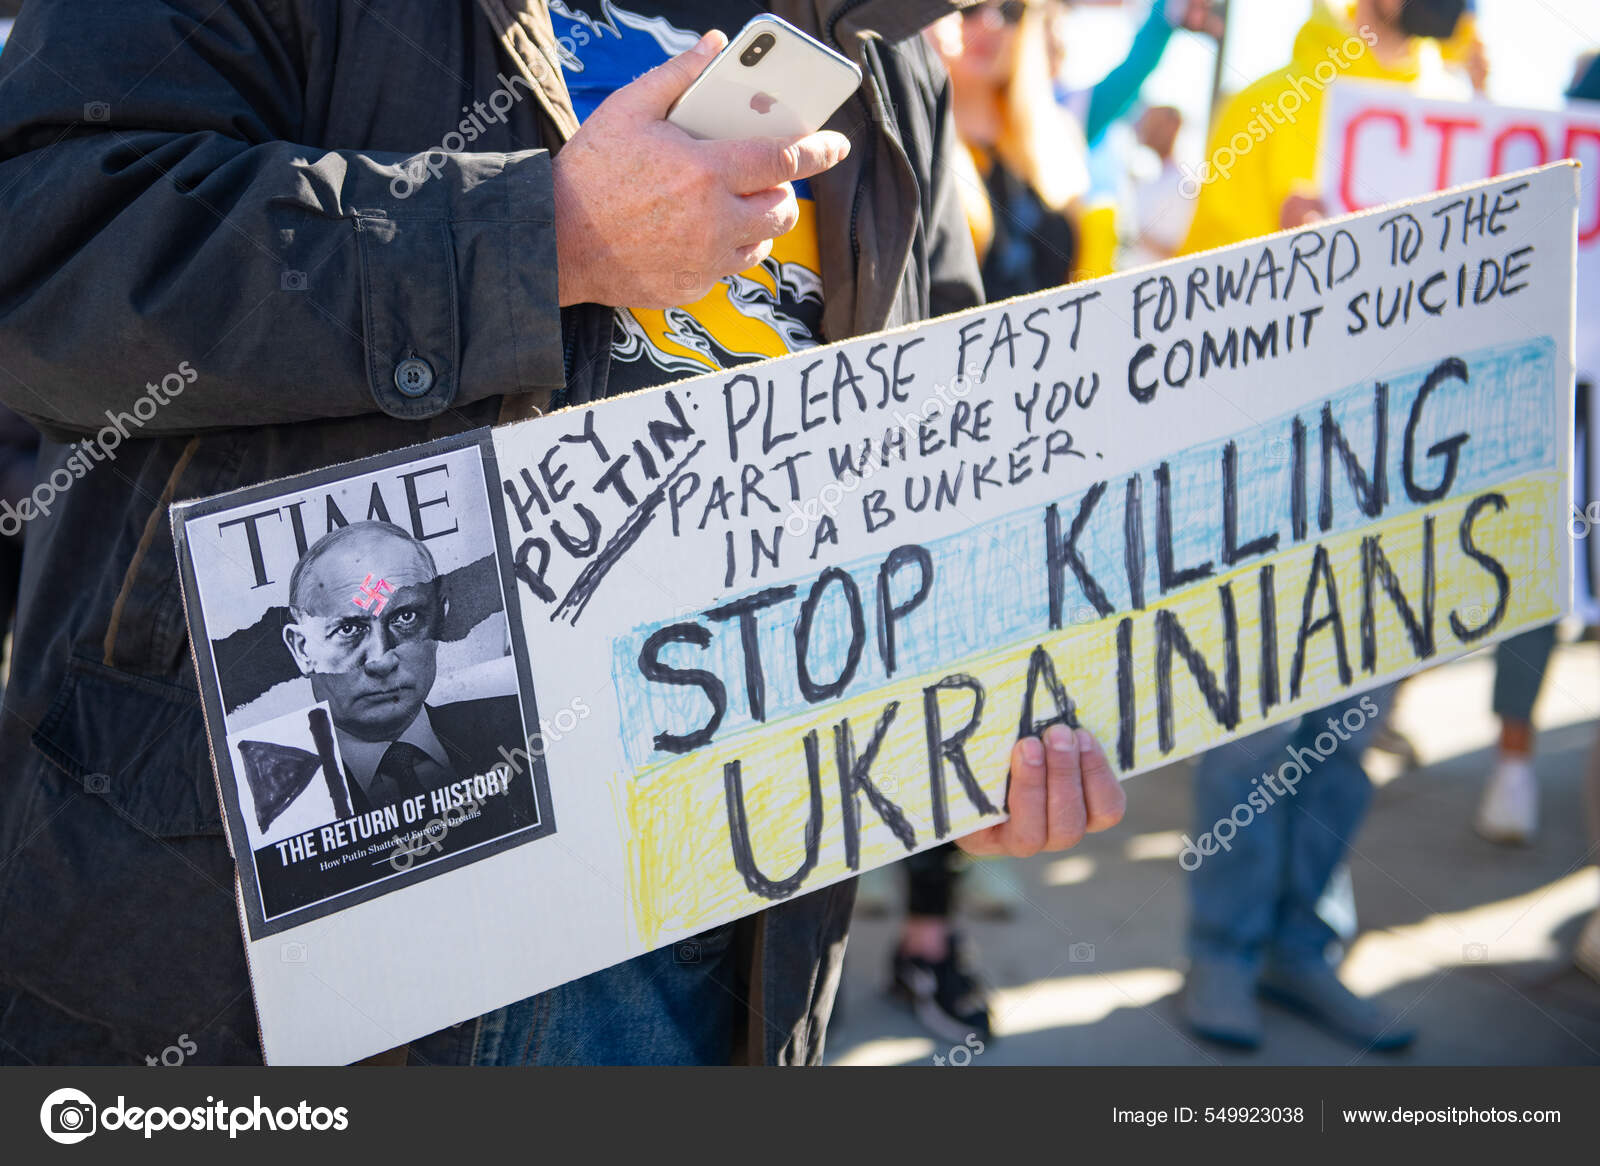 Ukraine Russia war